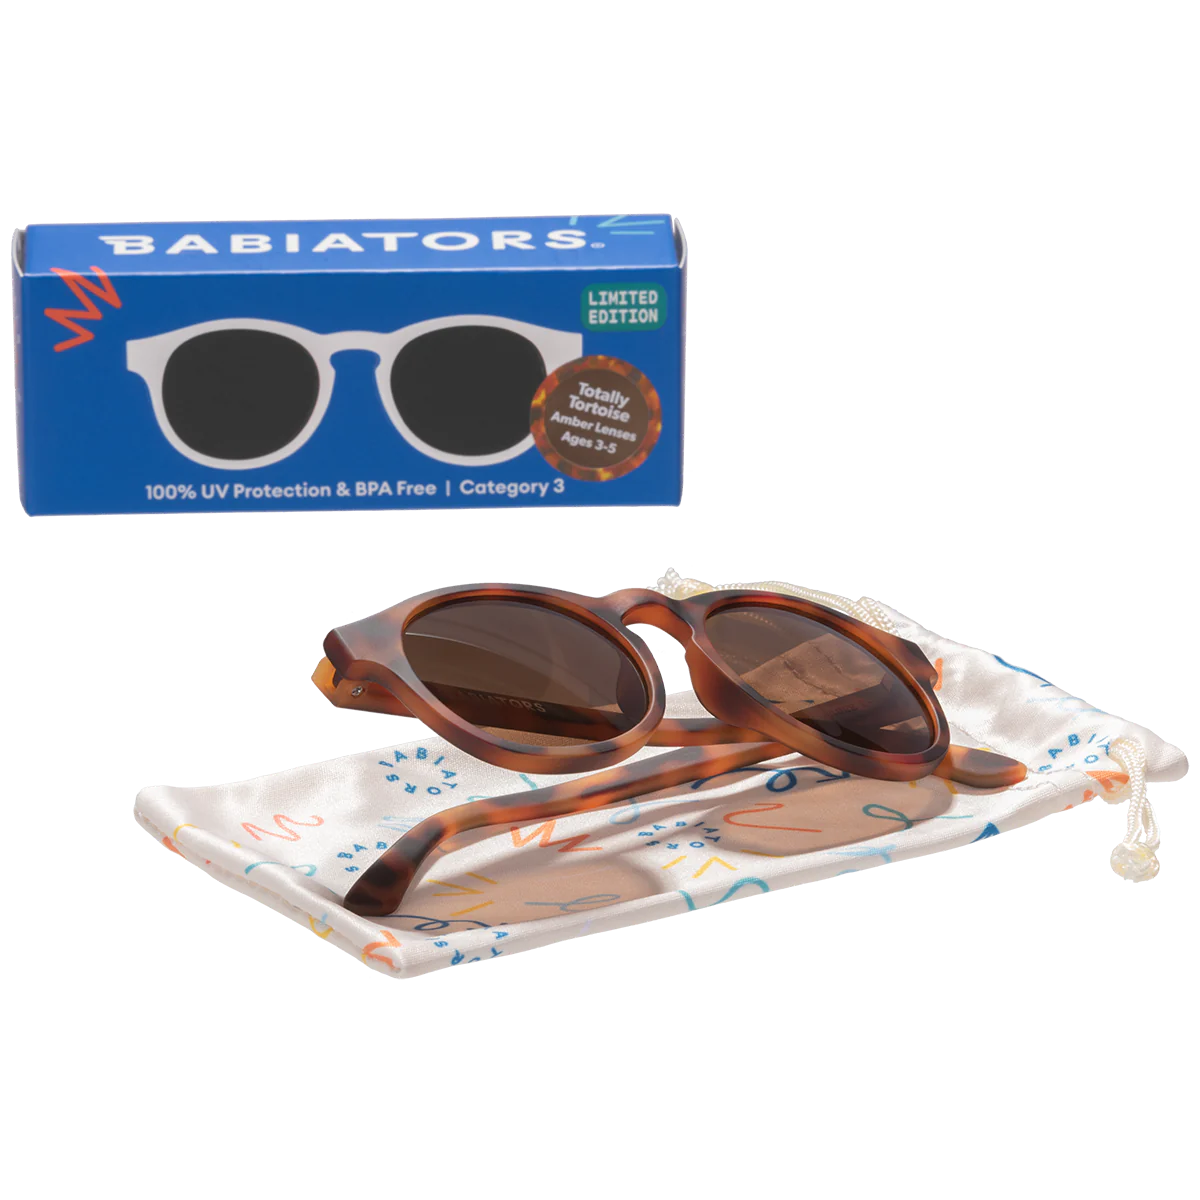 Babiators Original Keyholes - Totally Tortoise LIMITED EDITION Sunglasses Babiators 